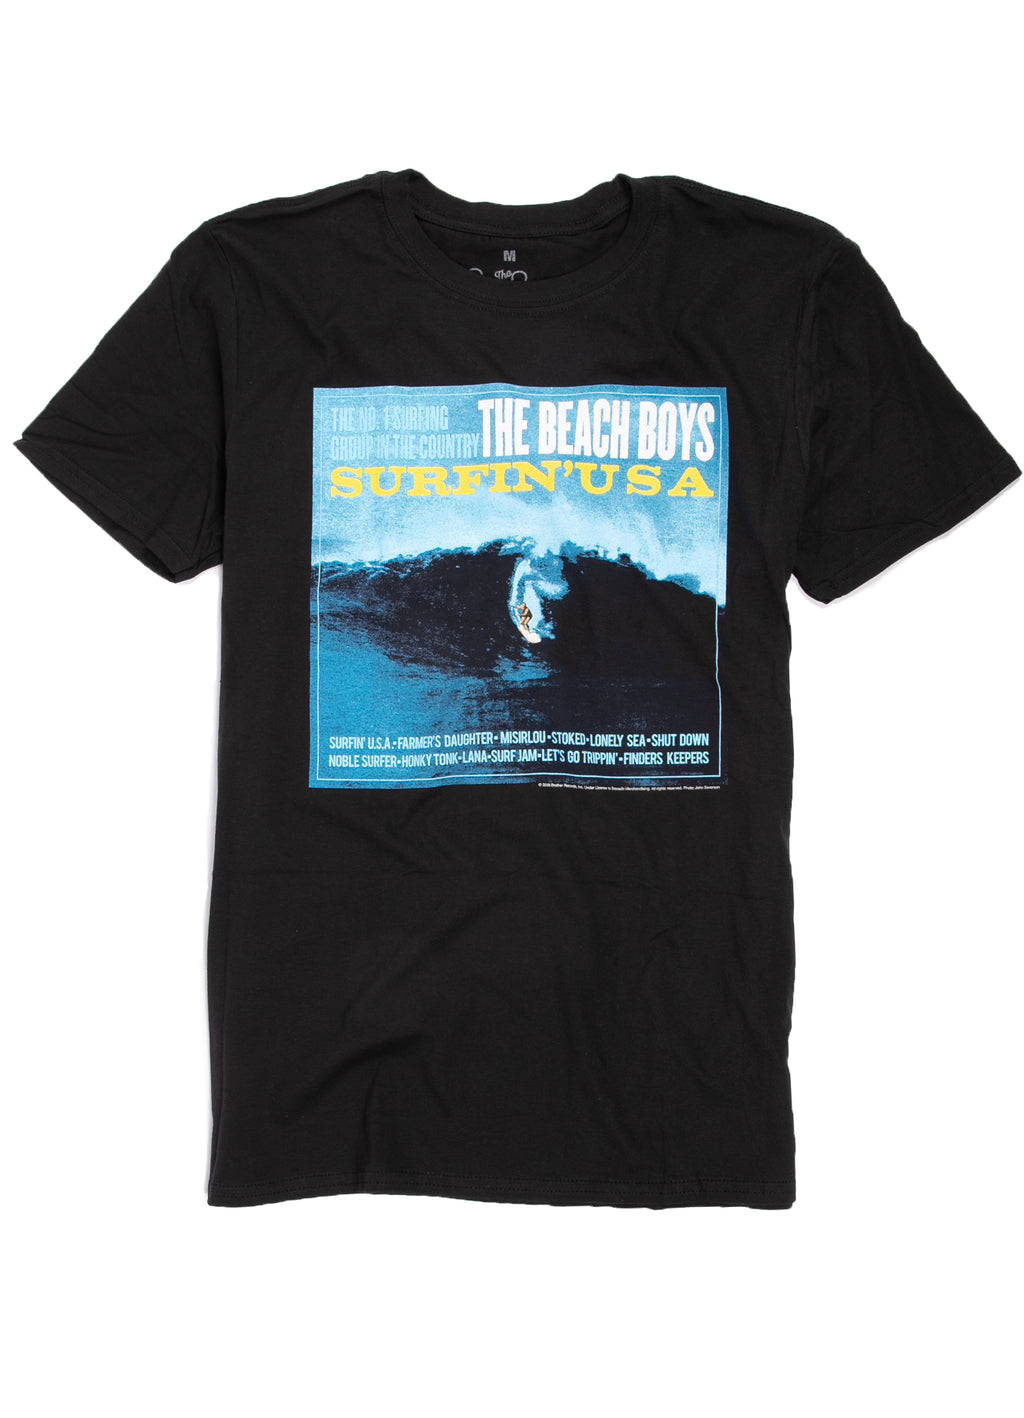 The Beach Boys "Surfin' USA" t-shirt.